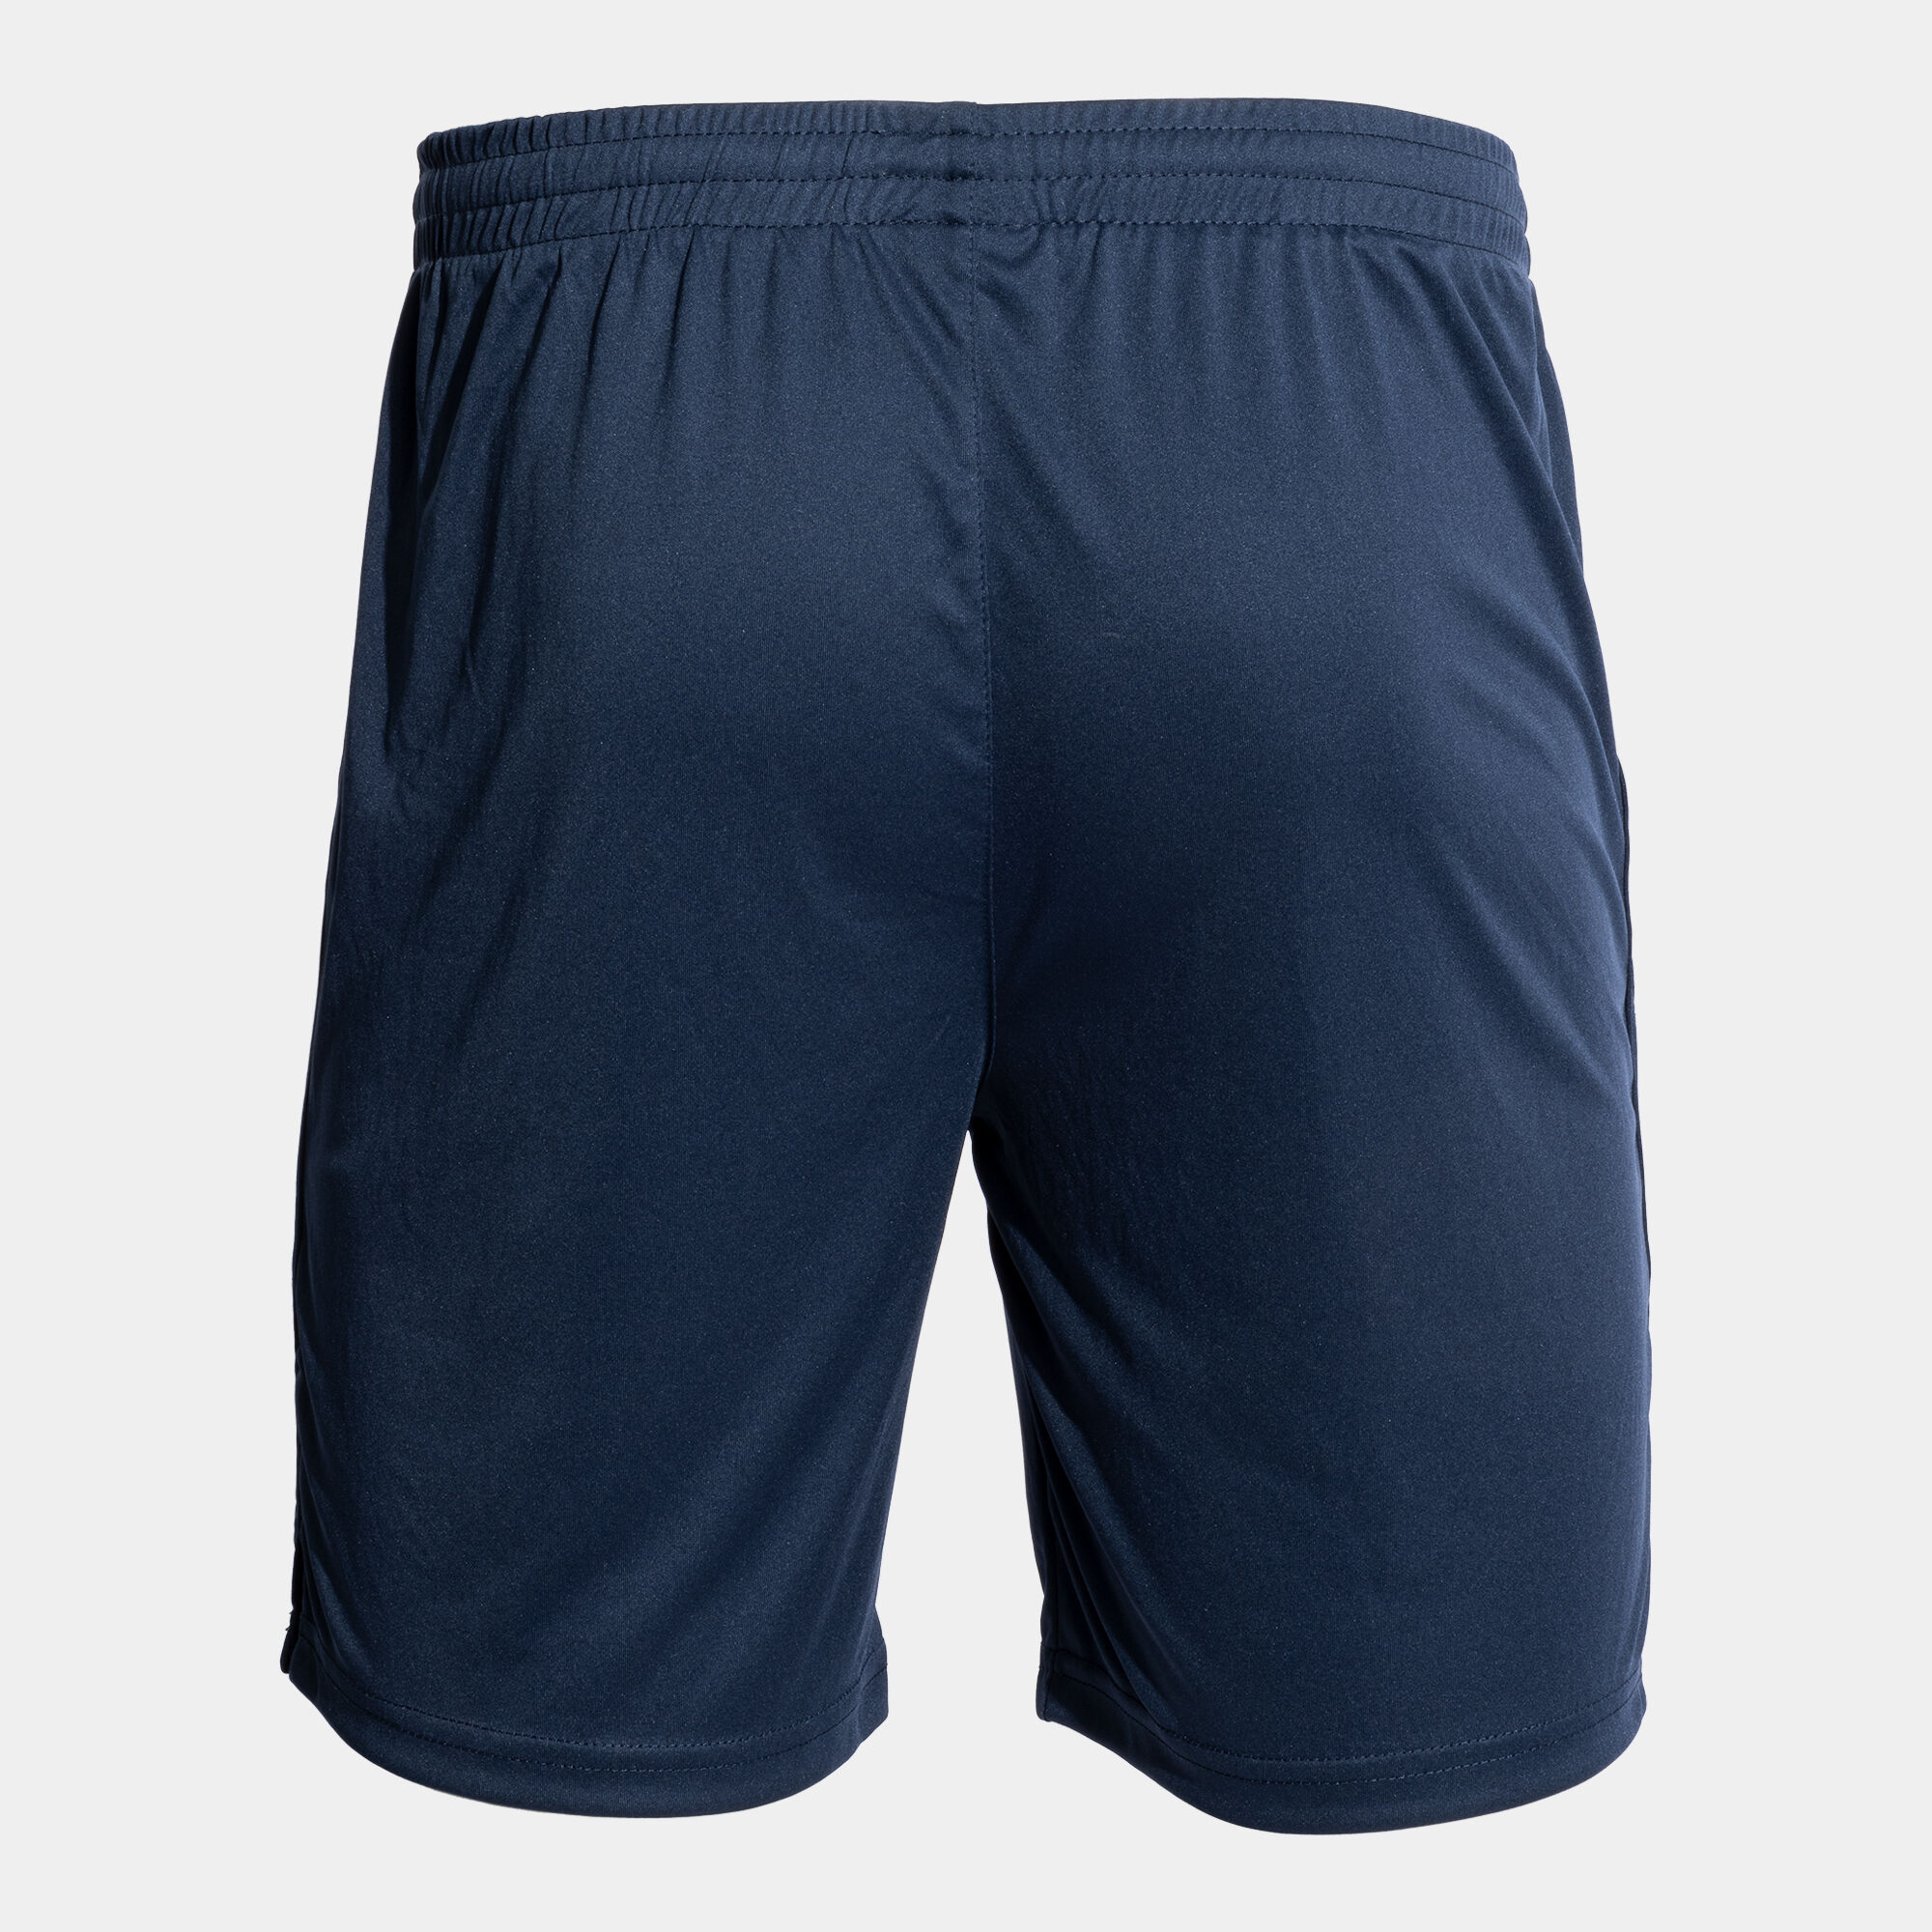 Bermuda shorts man Open III navy blue